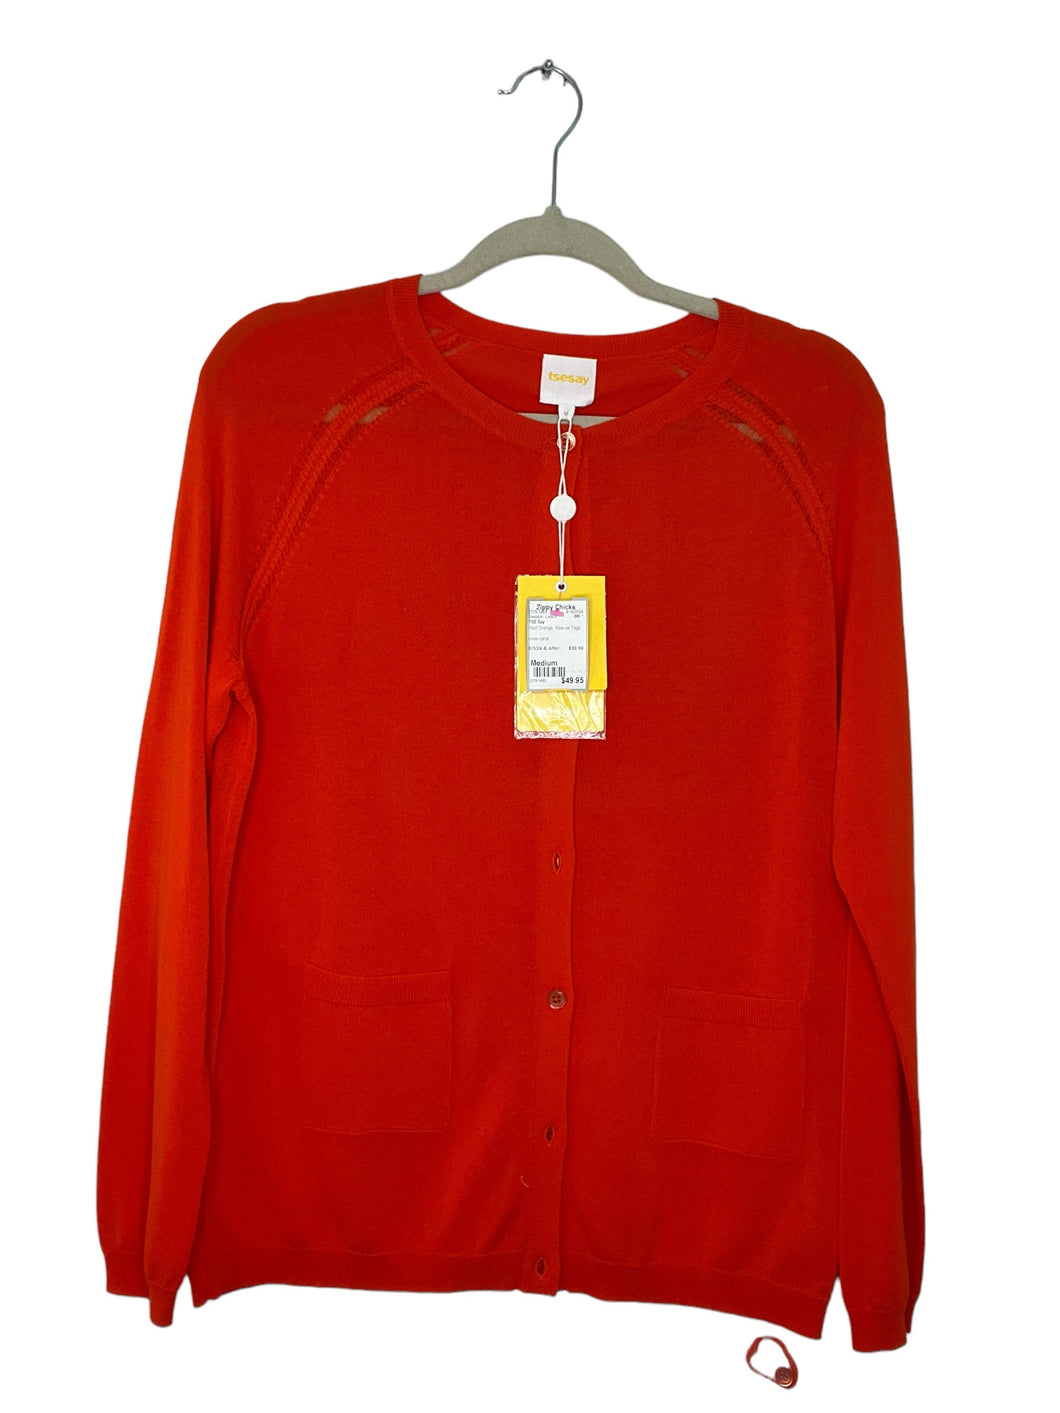 TSE Say Size Medium Red Orange Sweater- Ladies